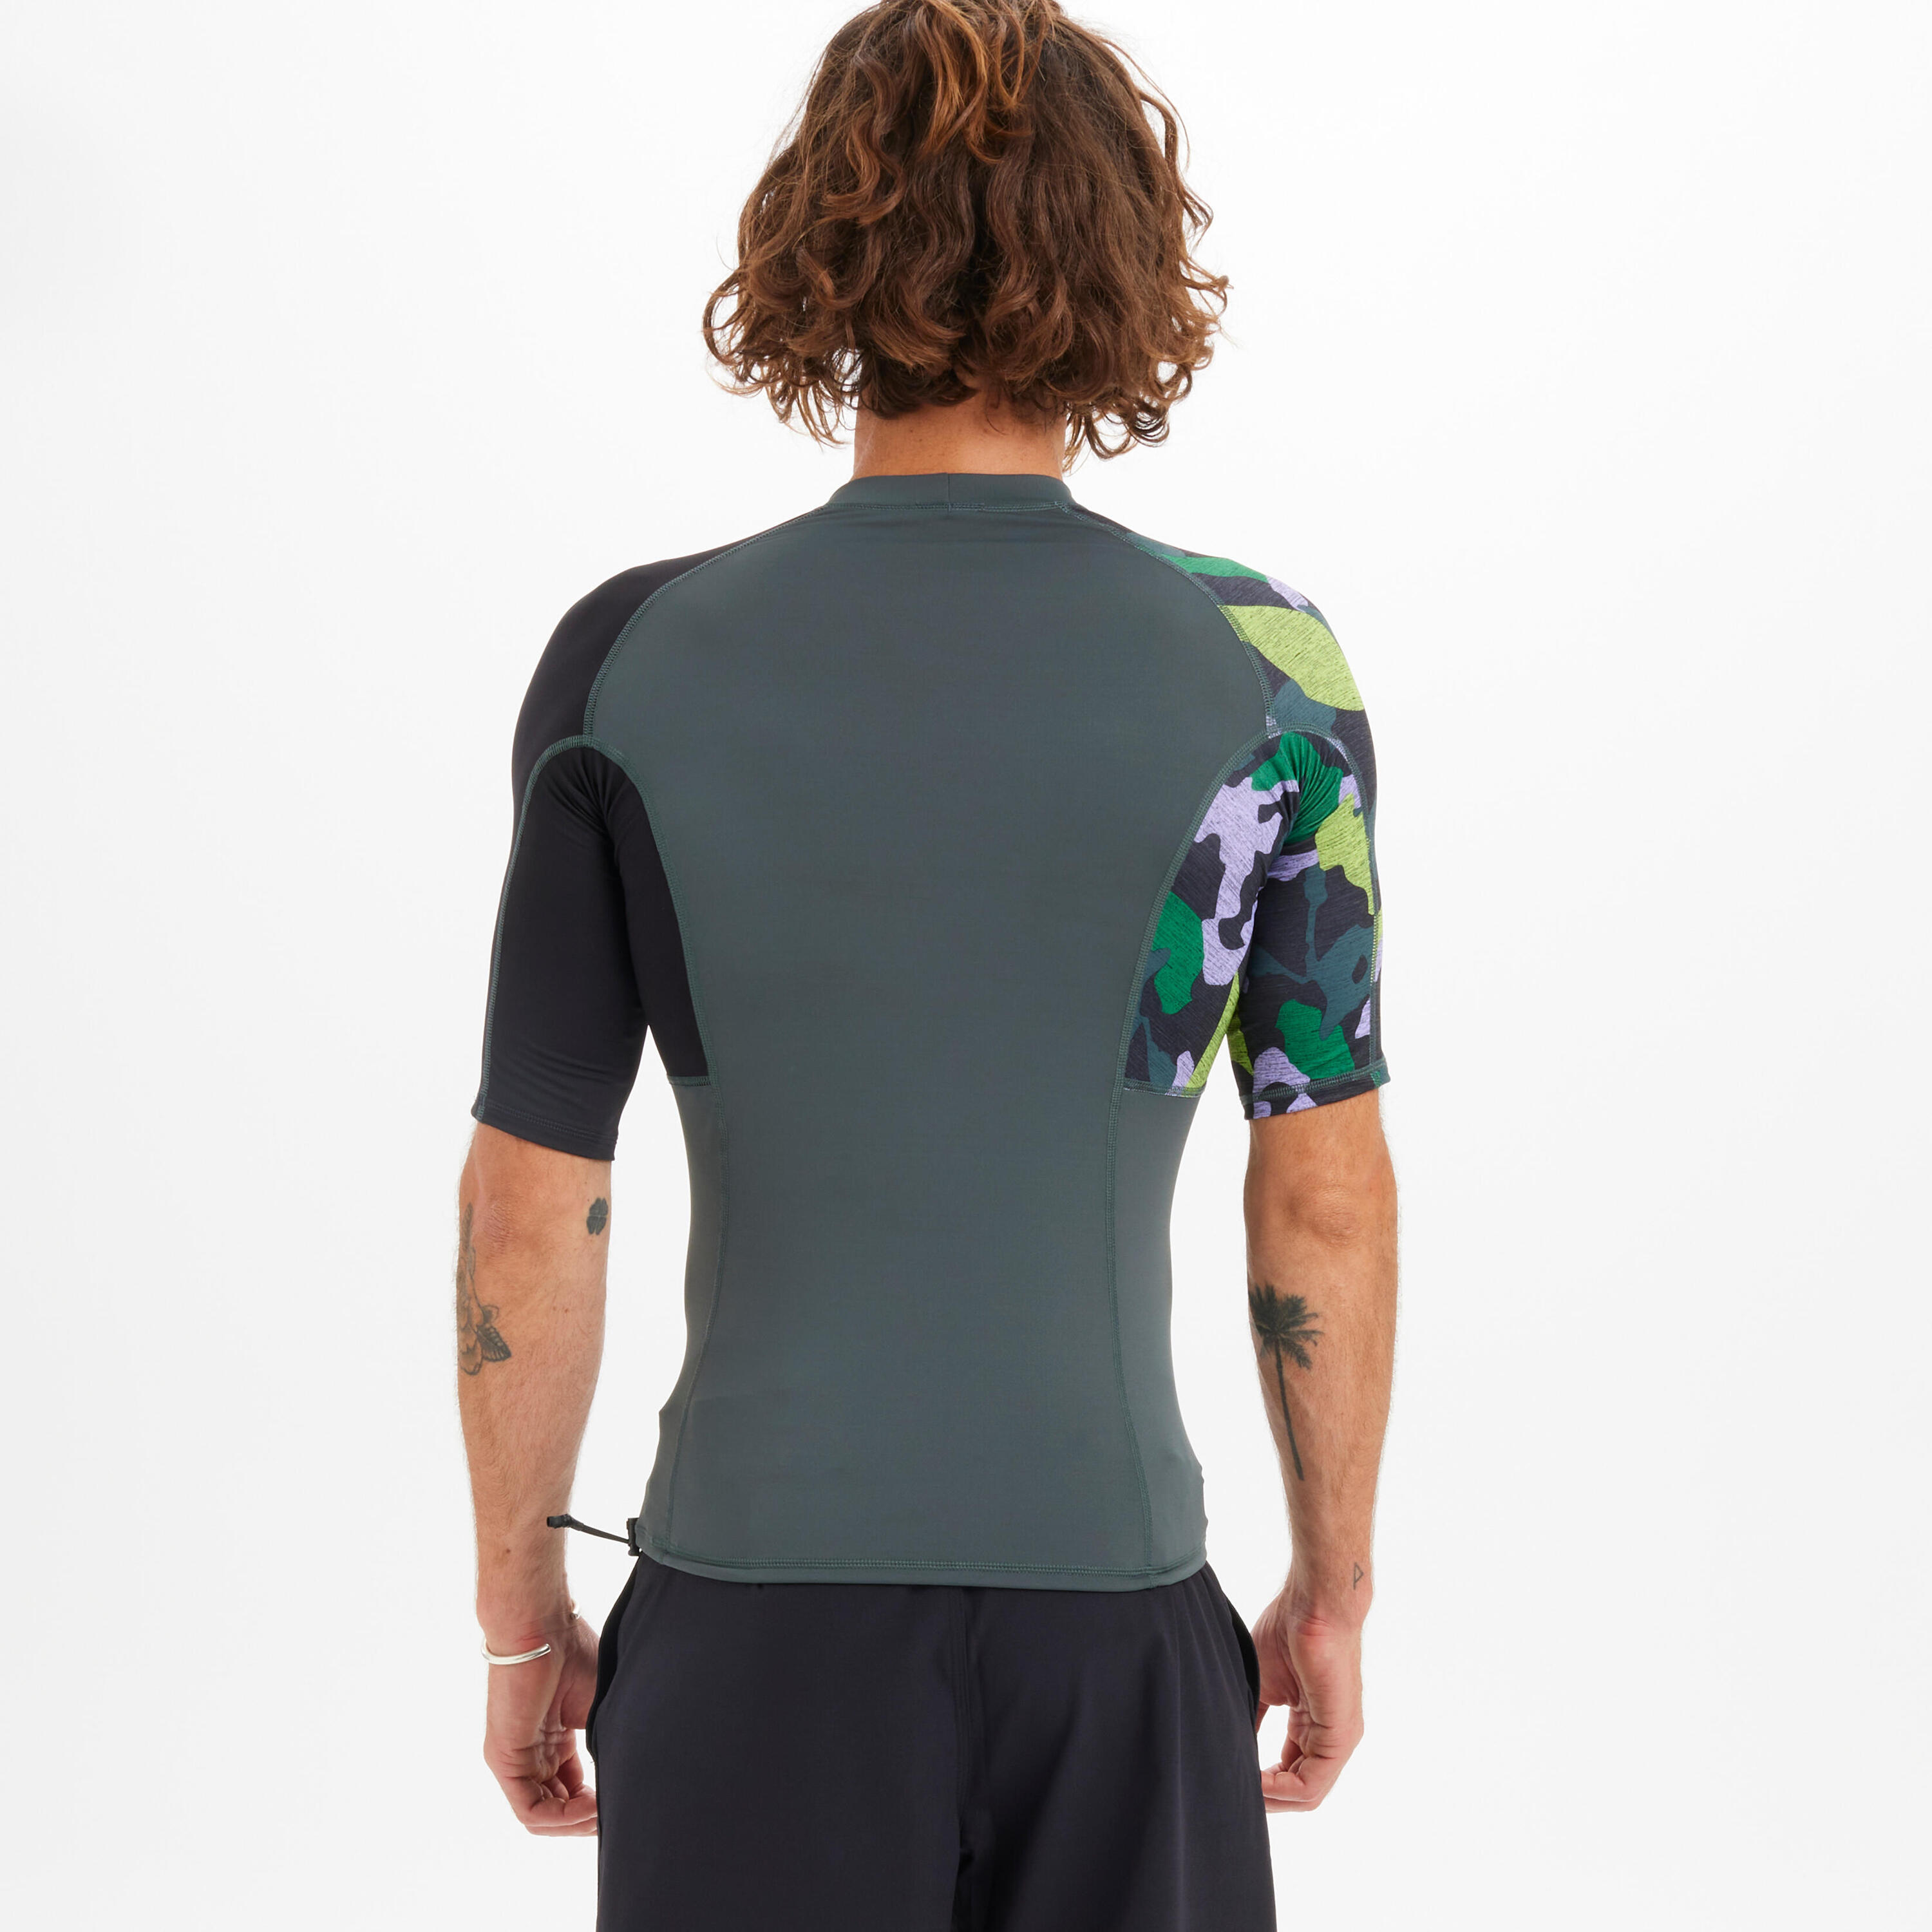 Men's Short-Sleeved UV Protection T-Shirt - 500 Camo Khaki 2/7